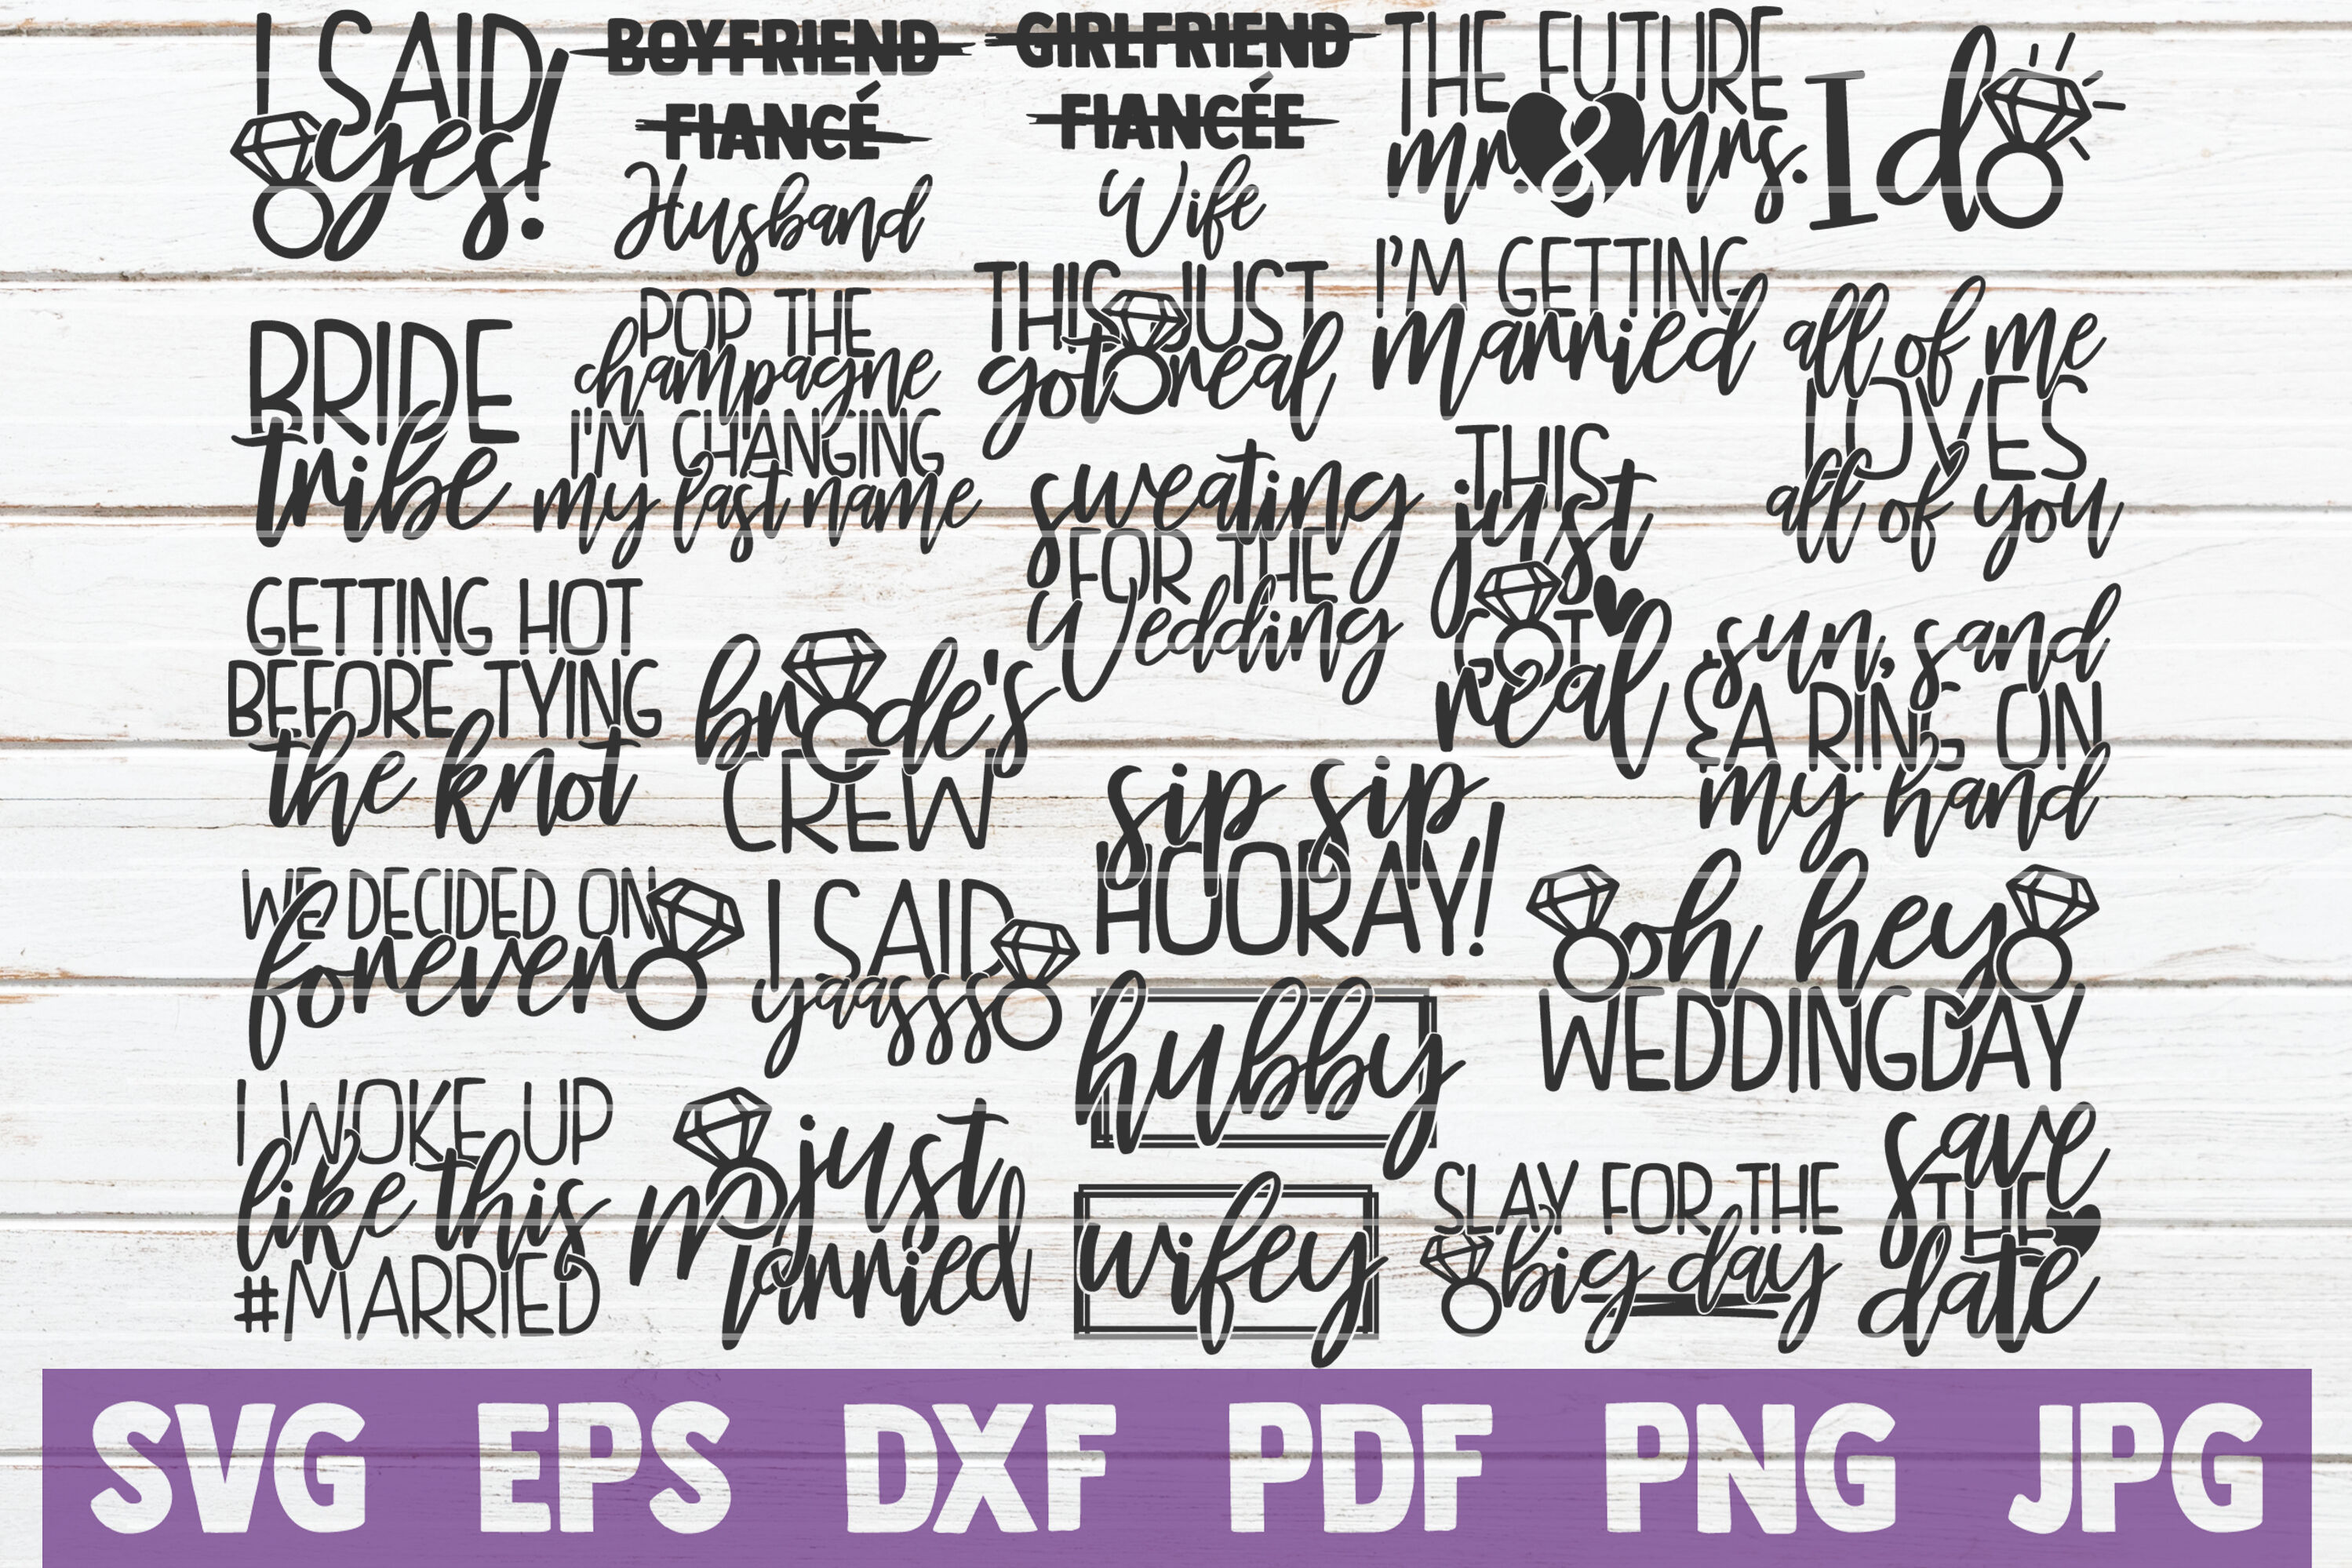 Free Free 110 Wedding Svg Bundle SVG PNG EPS DXF File